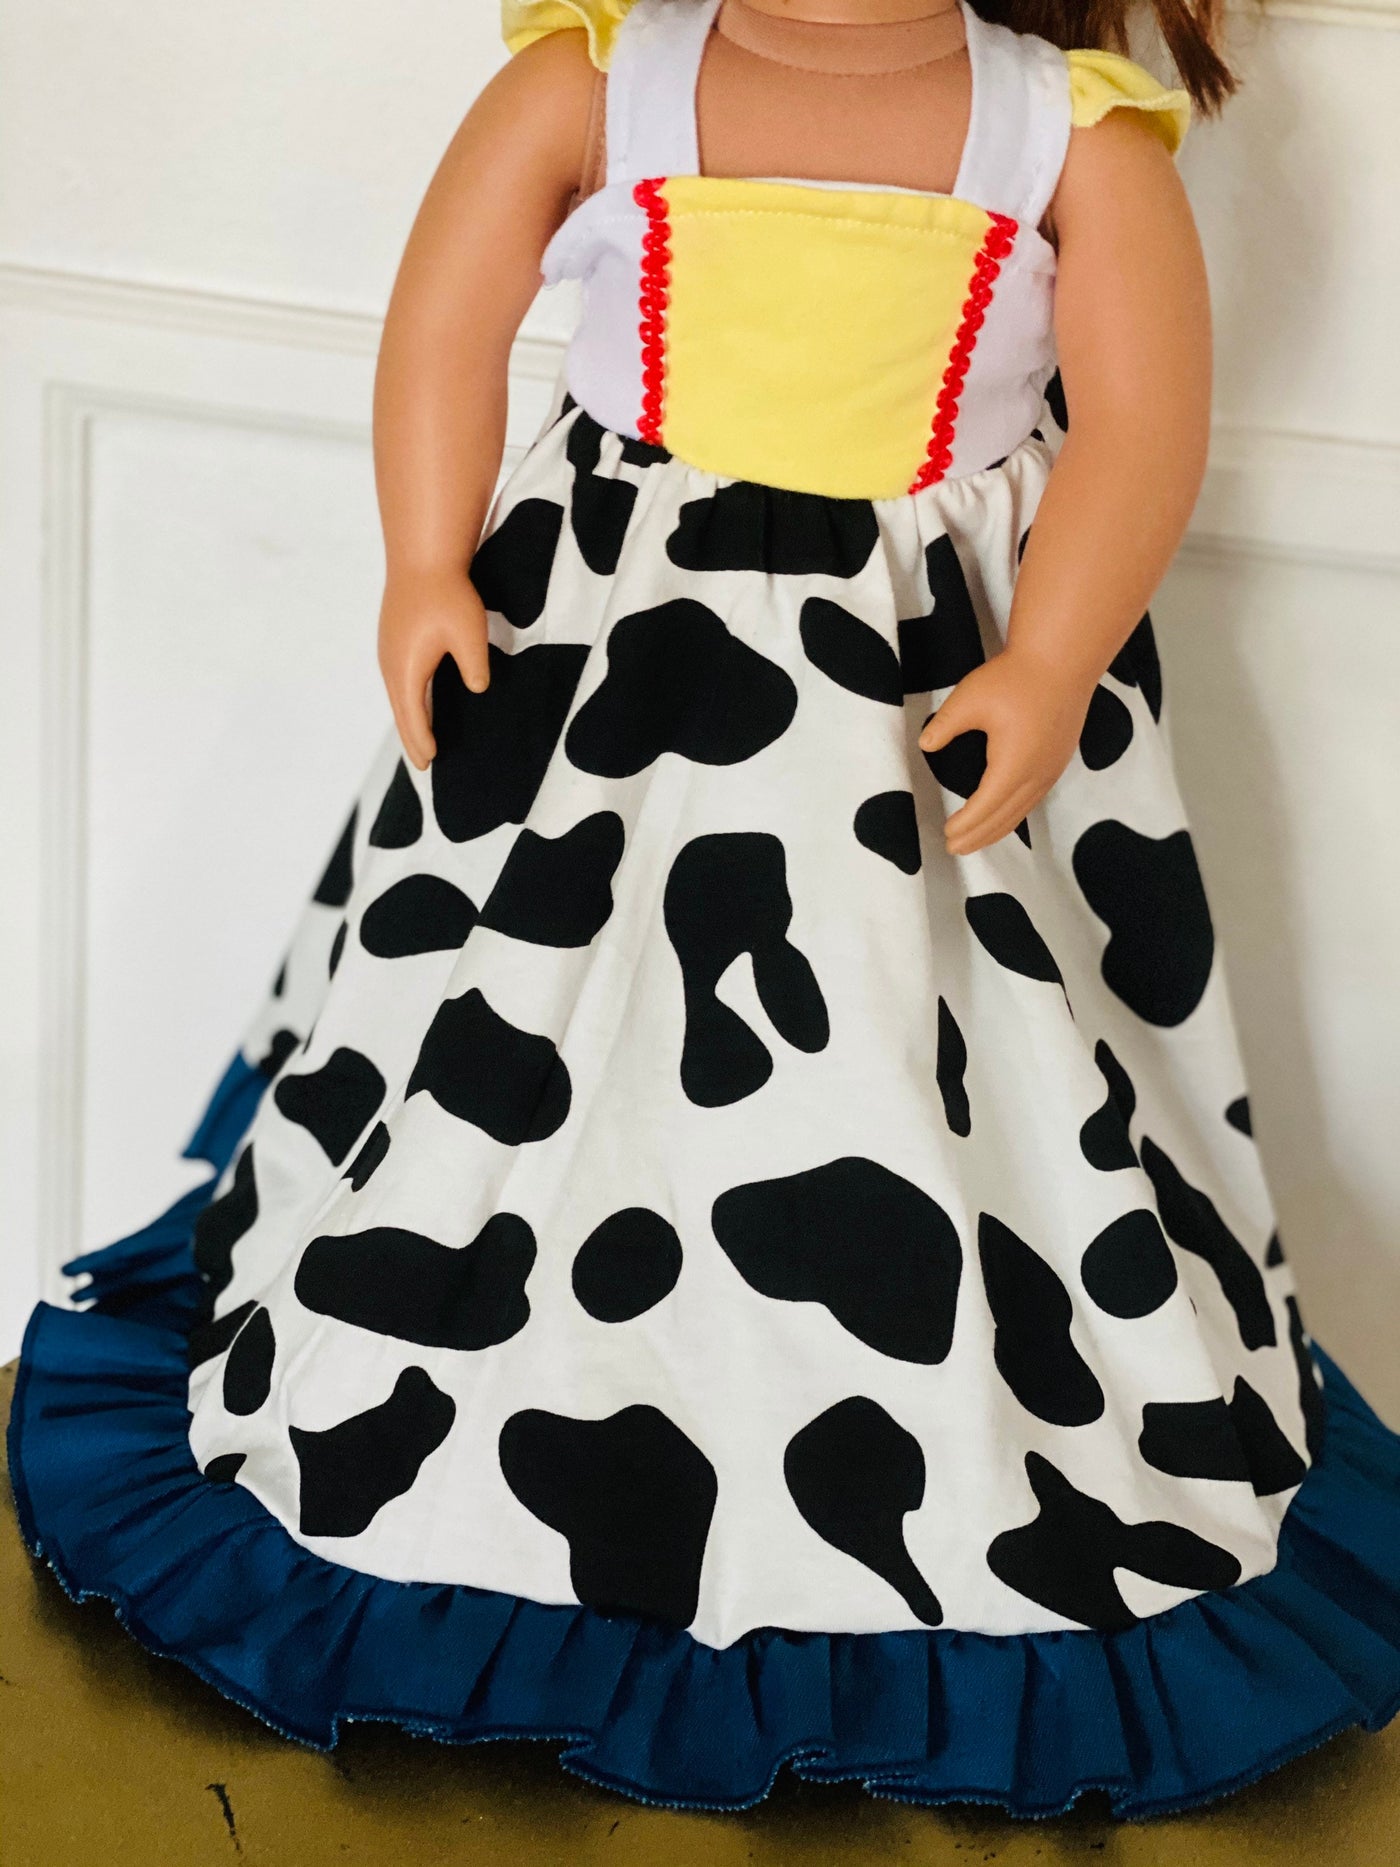 Cow girl doll dress